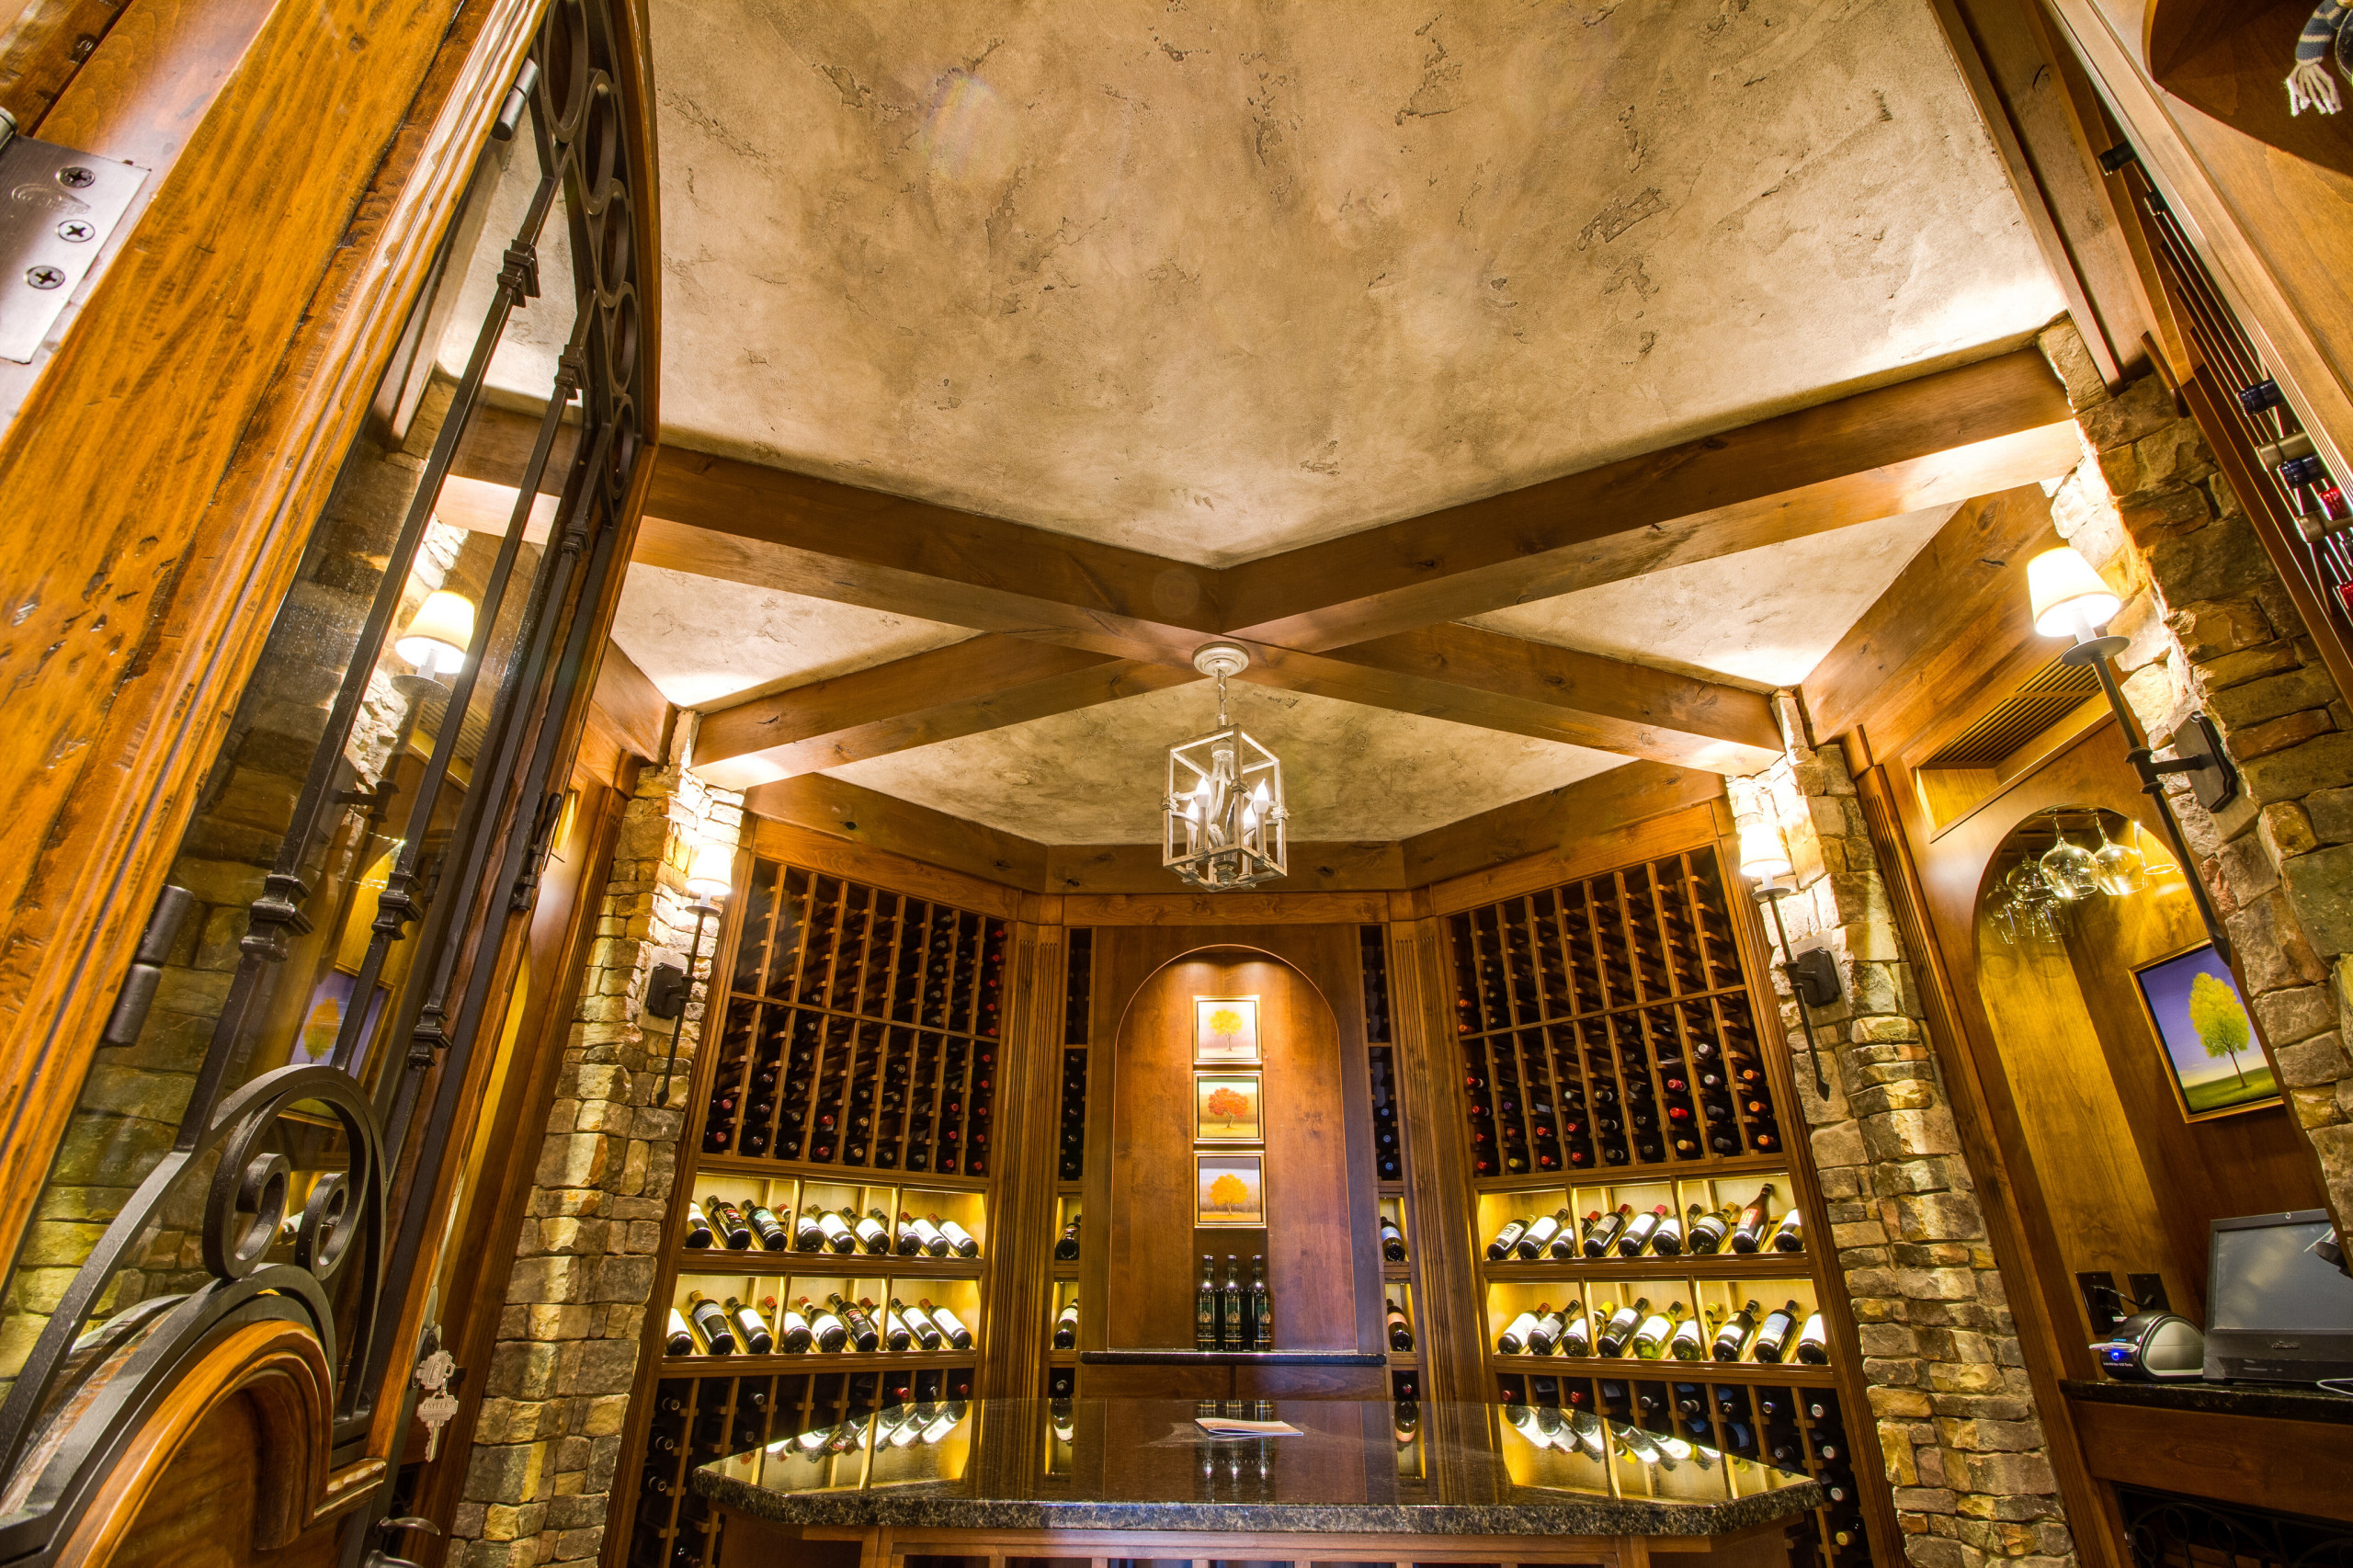 Custom Octagon Wine Cellar, Alder wood beams, stucco ceiling